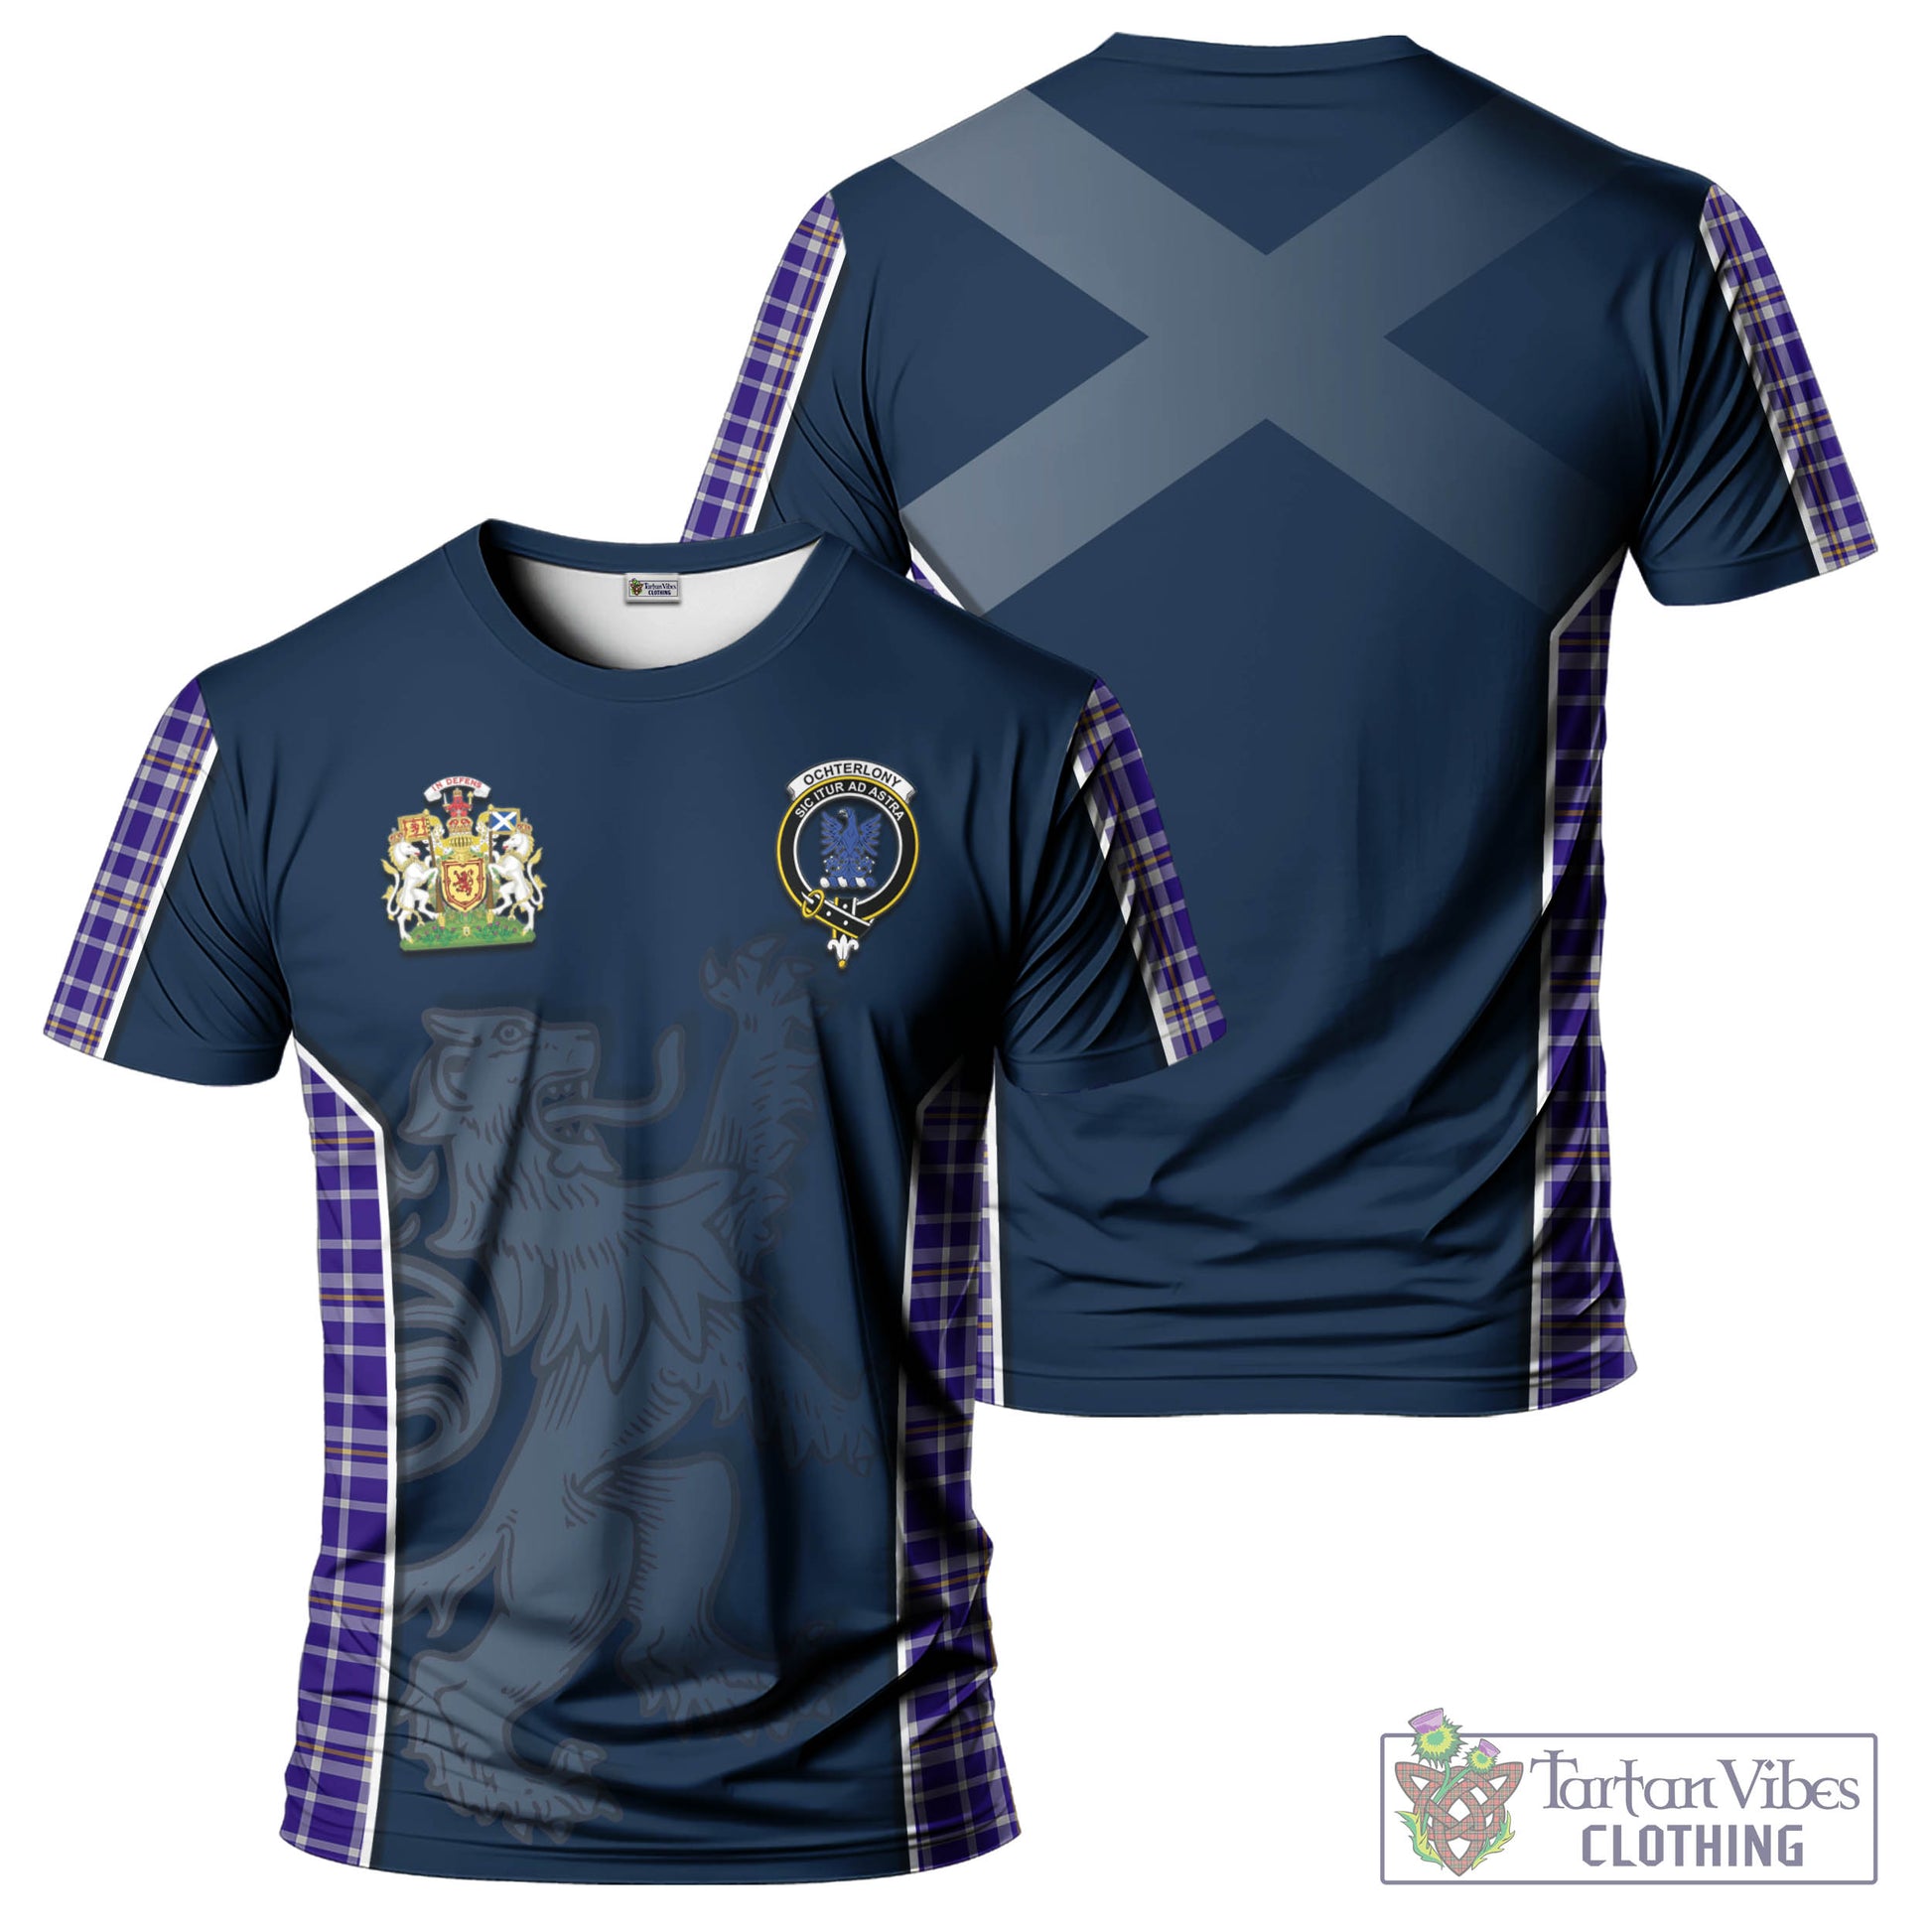 Tartan Vibes Clothing Ochterlony Tartan T-Shirt with Family Crest and Lion Rampant Vibes Sport Style